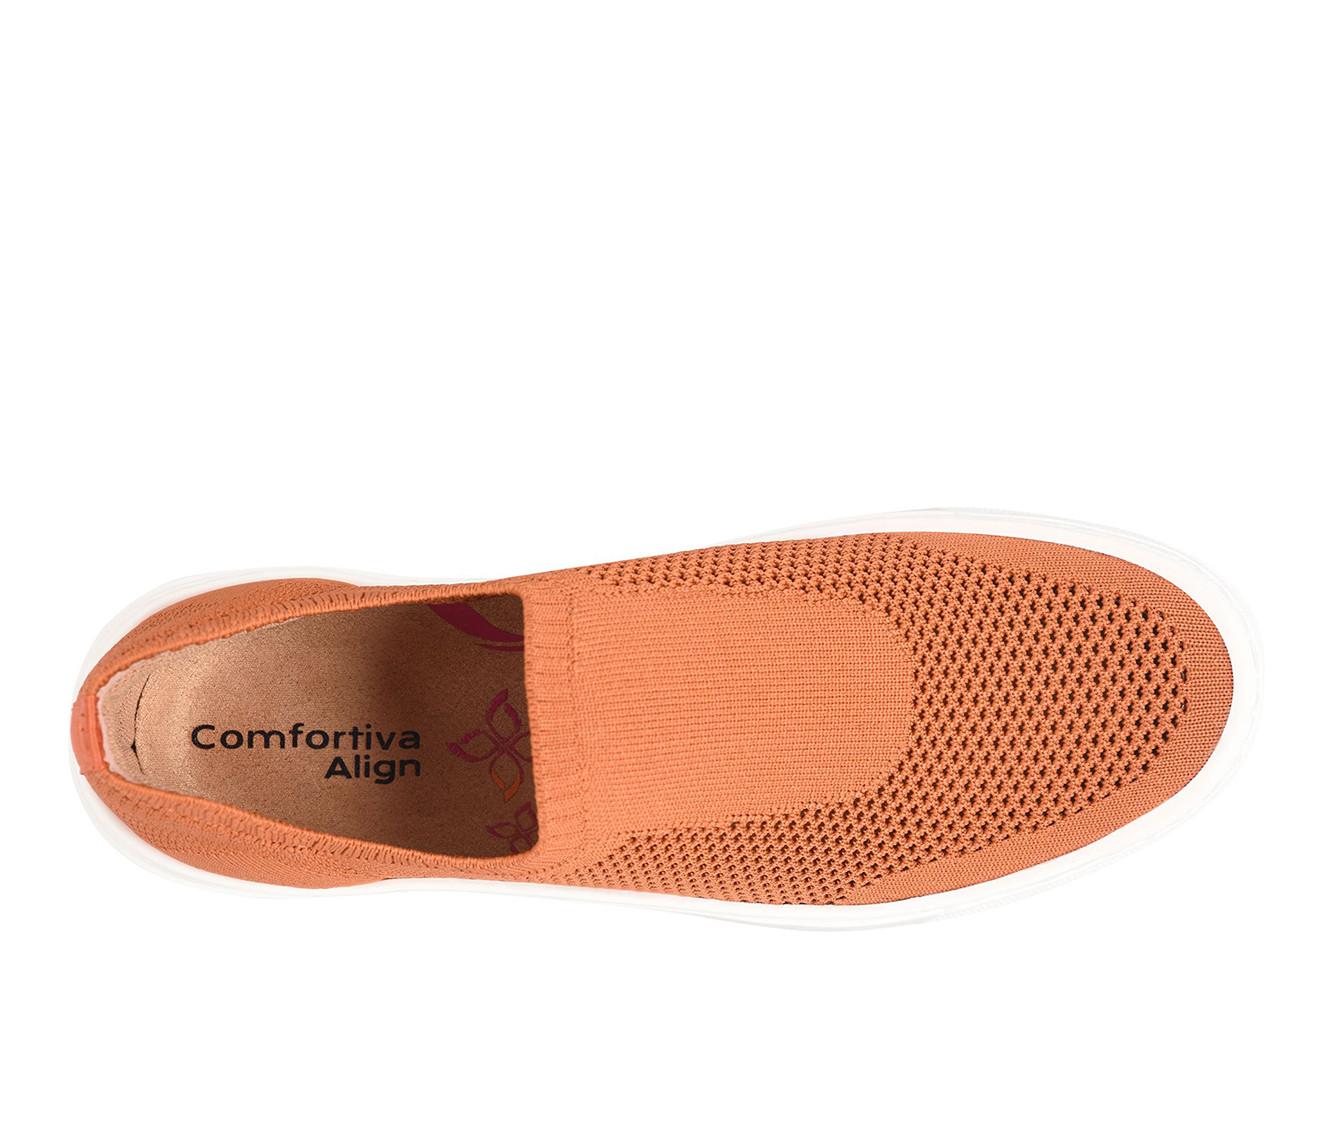 Women's Comfortiva Tai Slip On Shoes